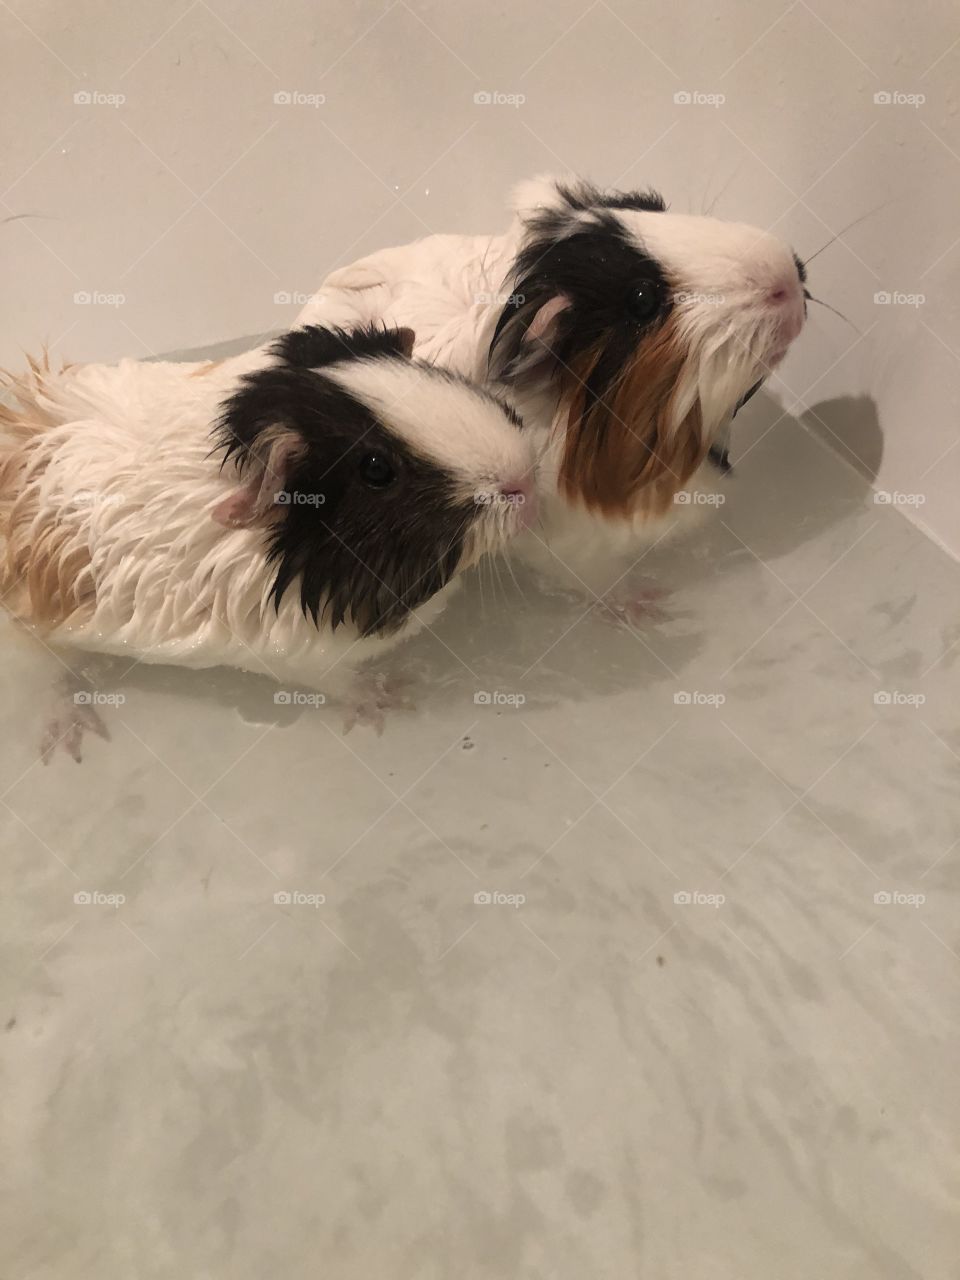 Adorable guina pigs taking a bath